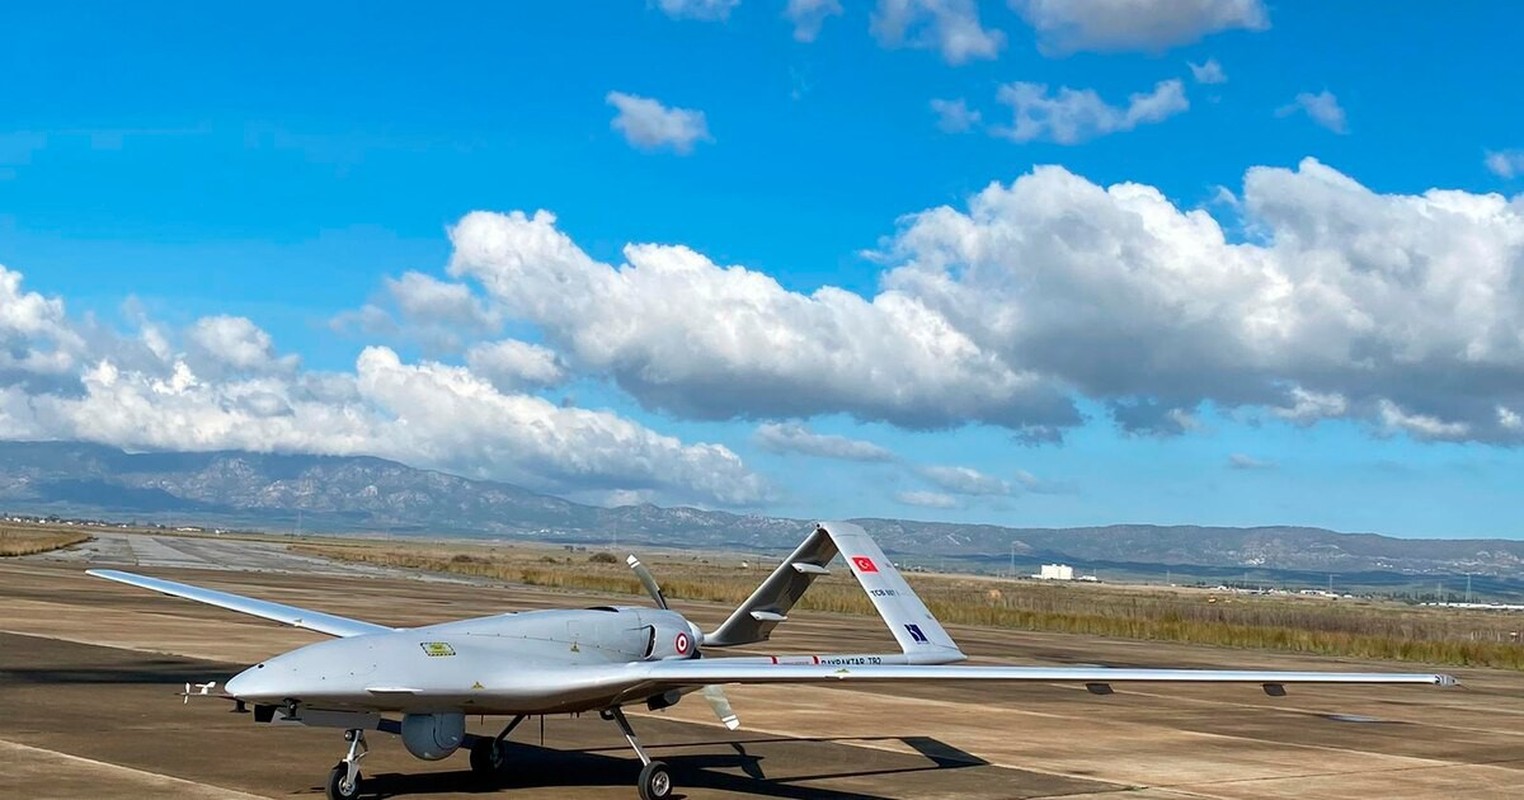 Nga co vu khi diet het UAV Tho Nhi Ky o Karabakh trong mot ngay?-Hinh-5